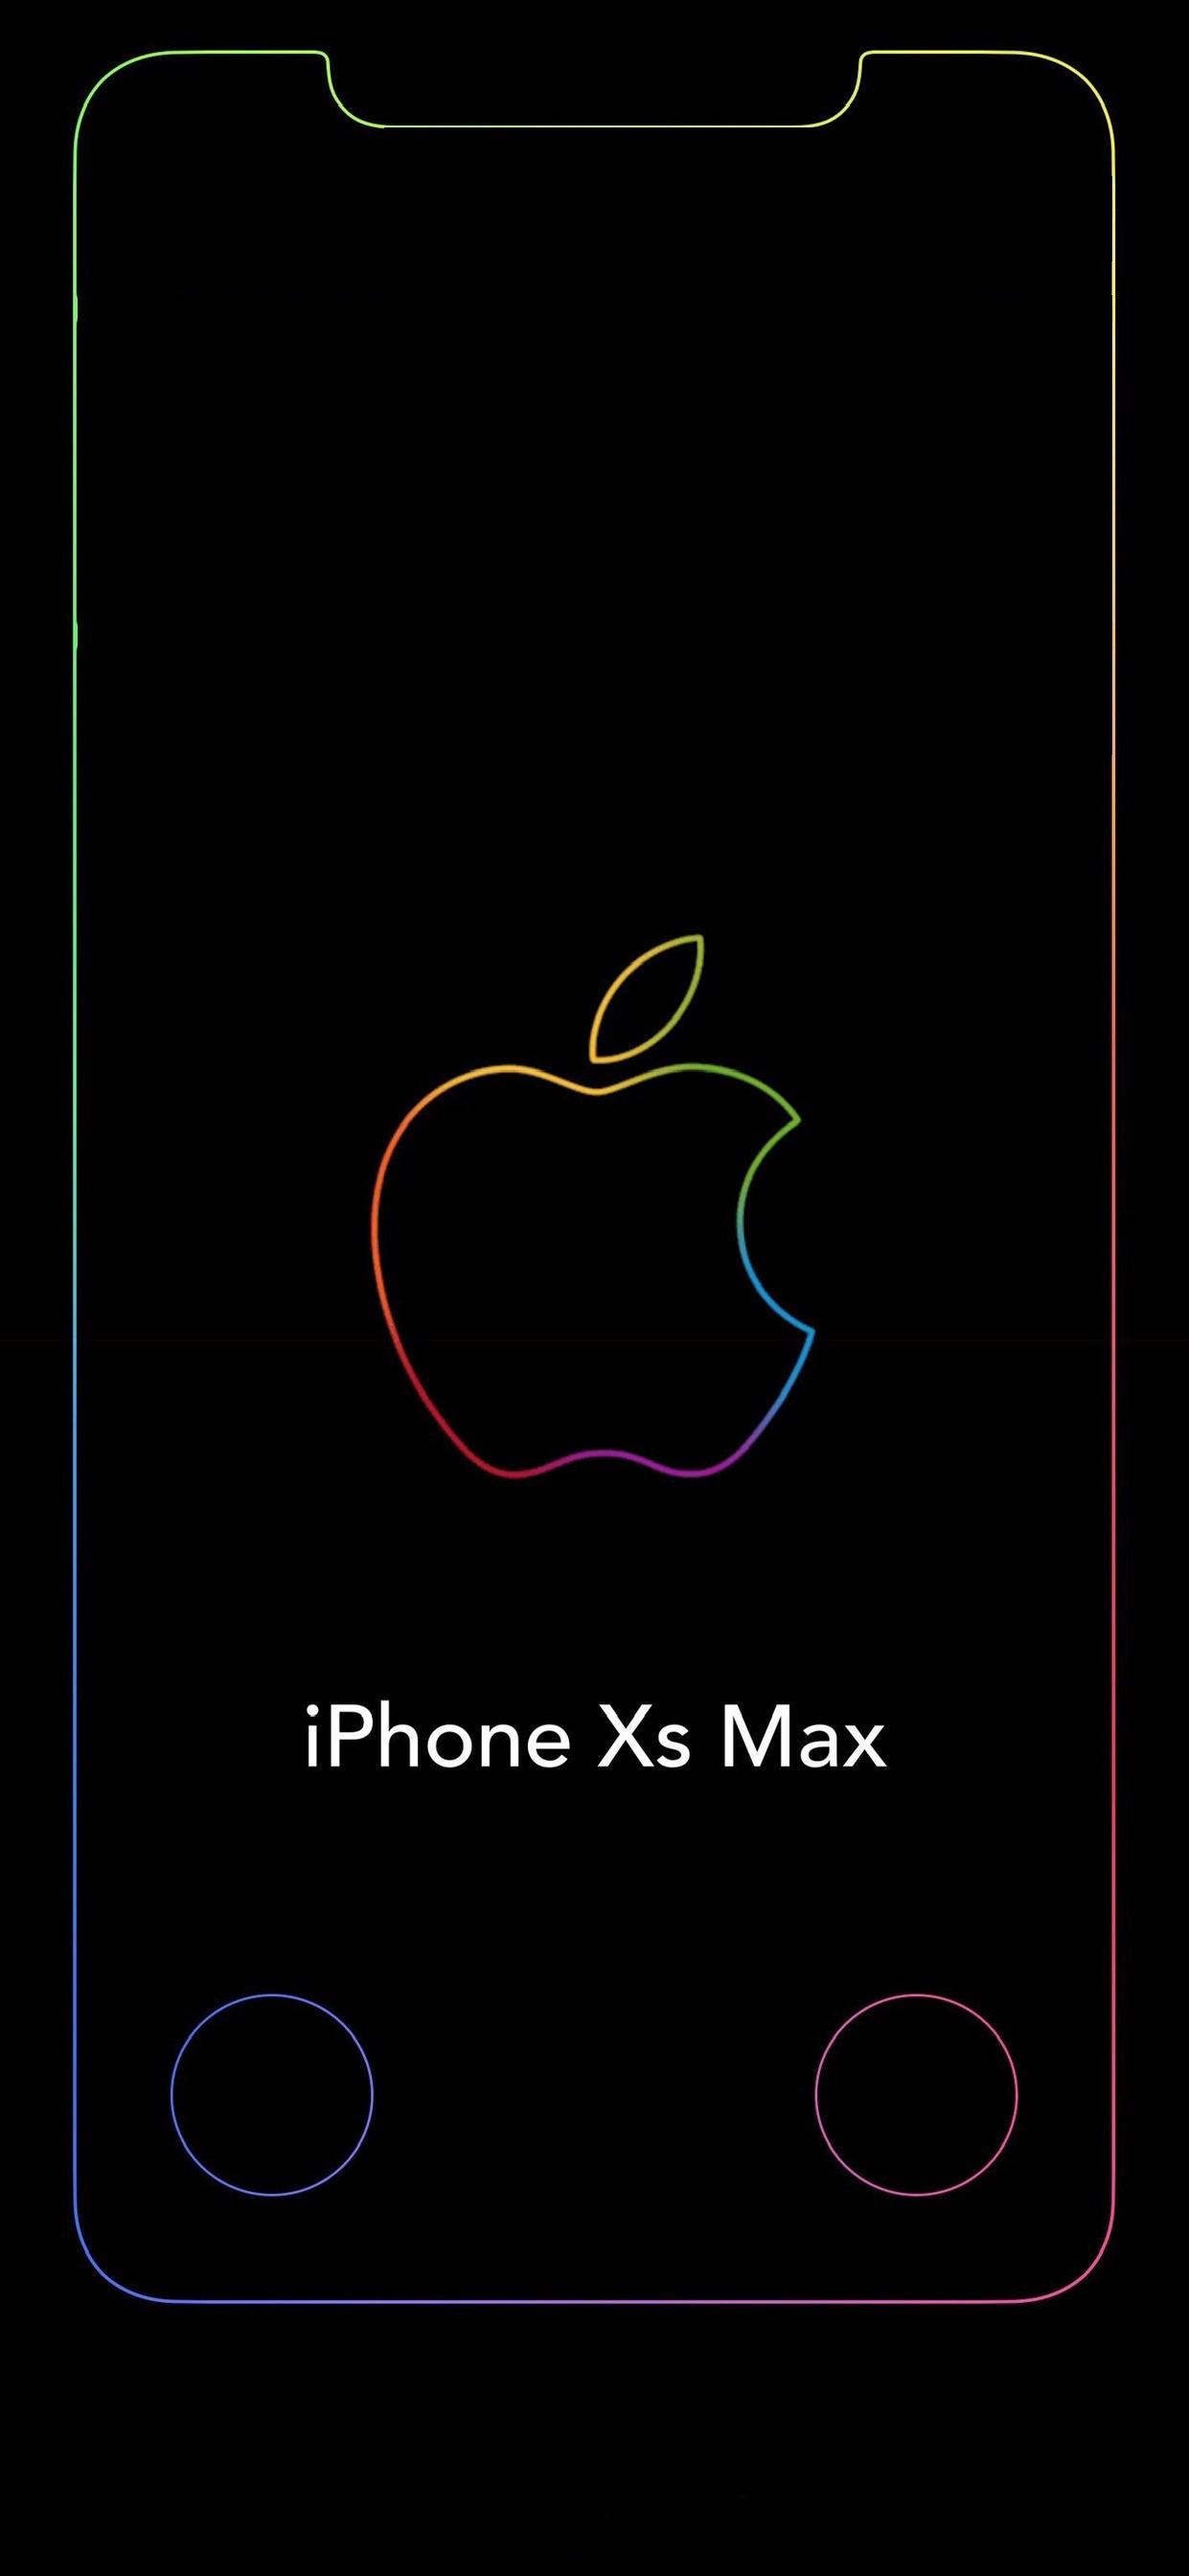 iPhone XS Max Lock Screen Wallpaper